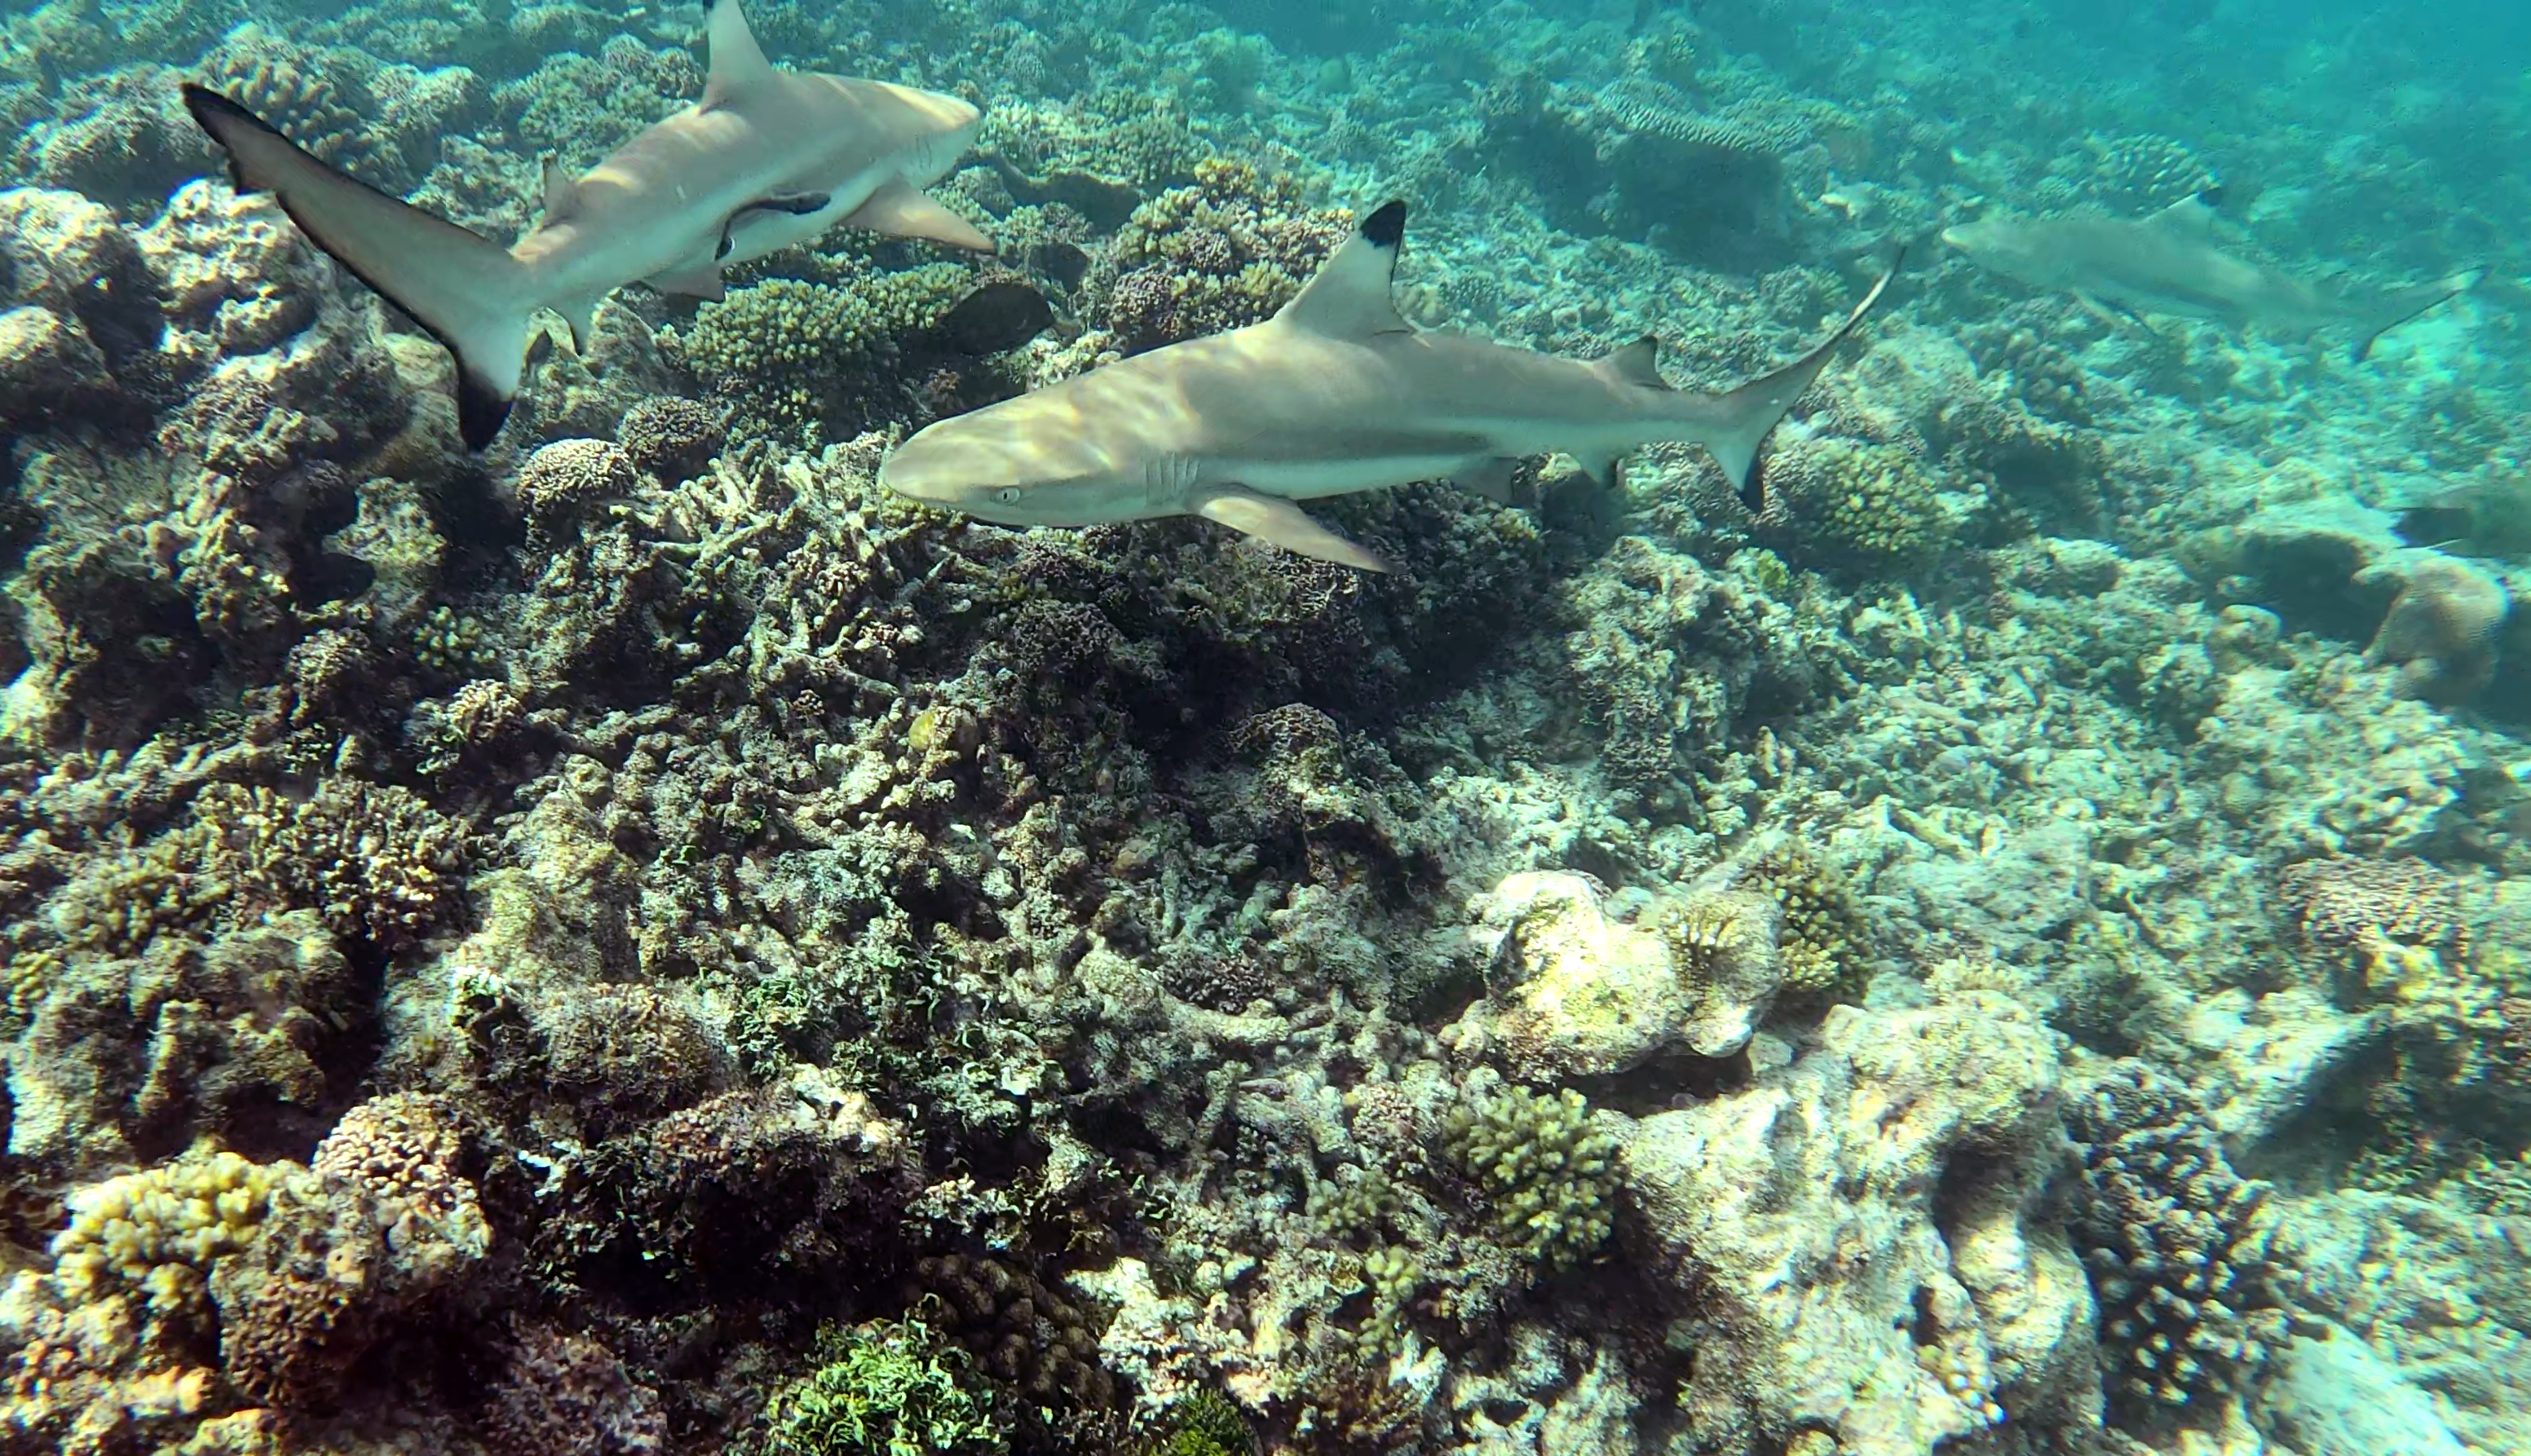 Blaktip reef Shark - Squalo Pinna nera - Carcharhinus melanopterus - www.intotheblue.it